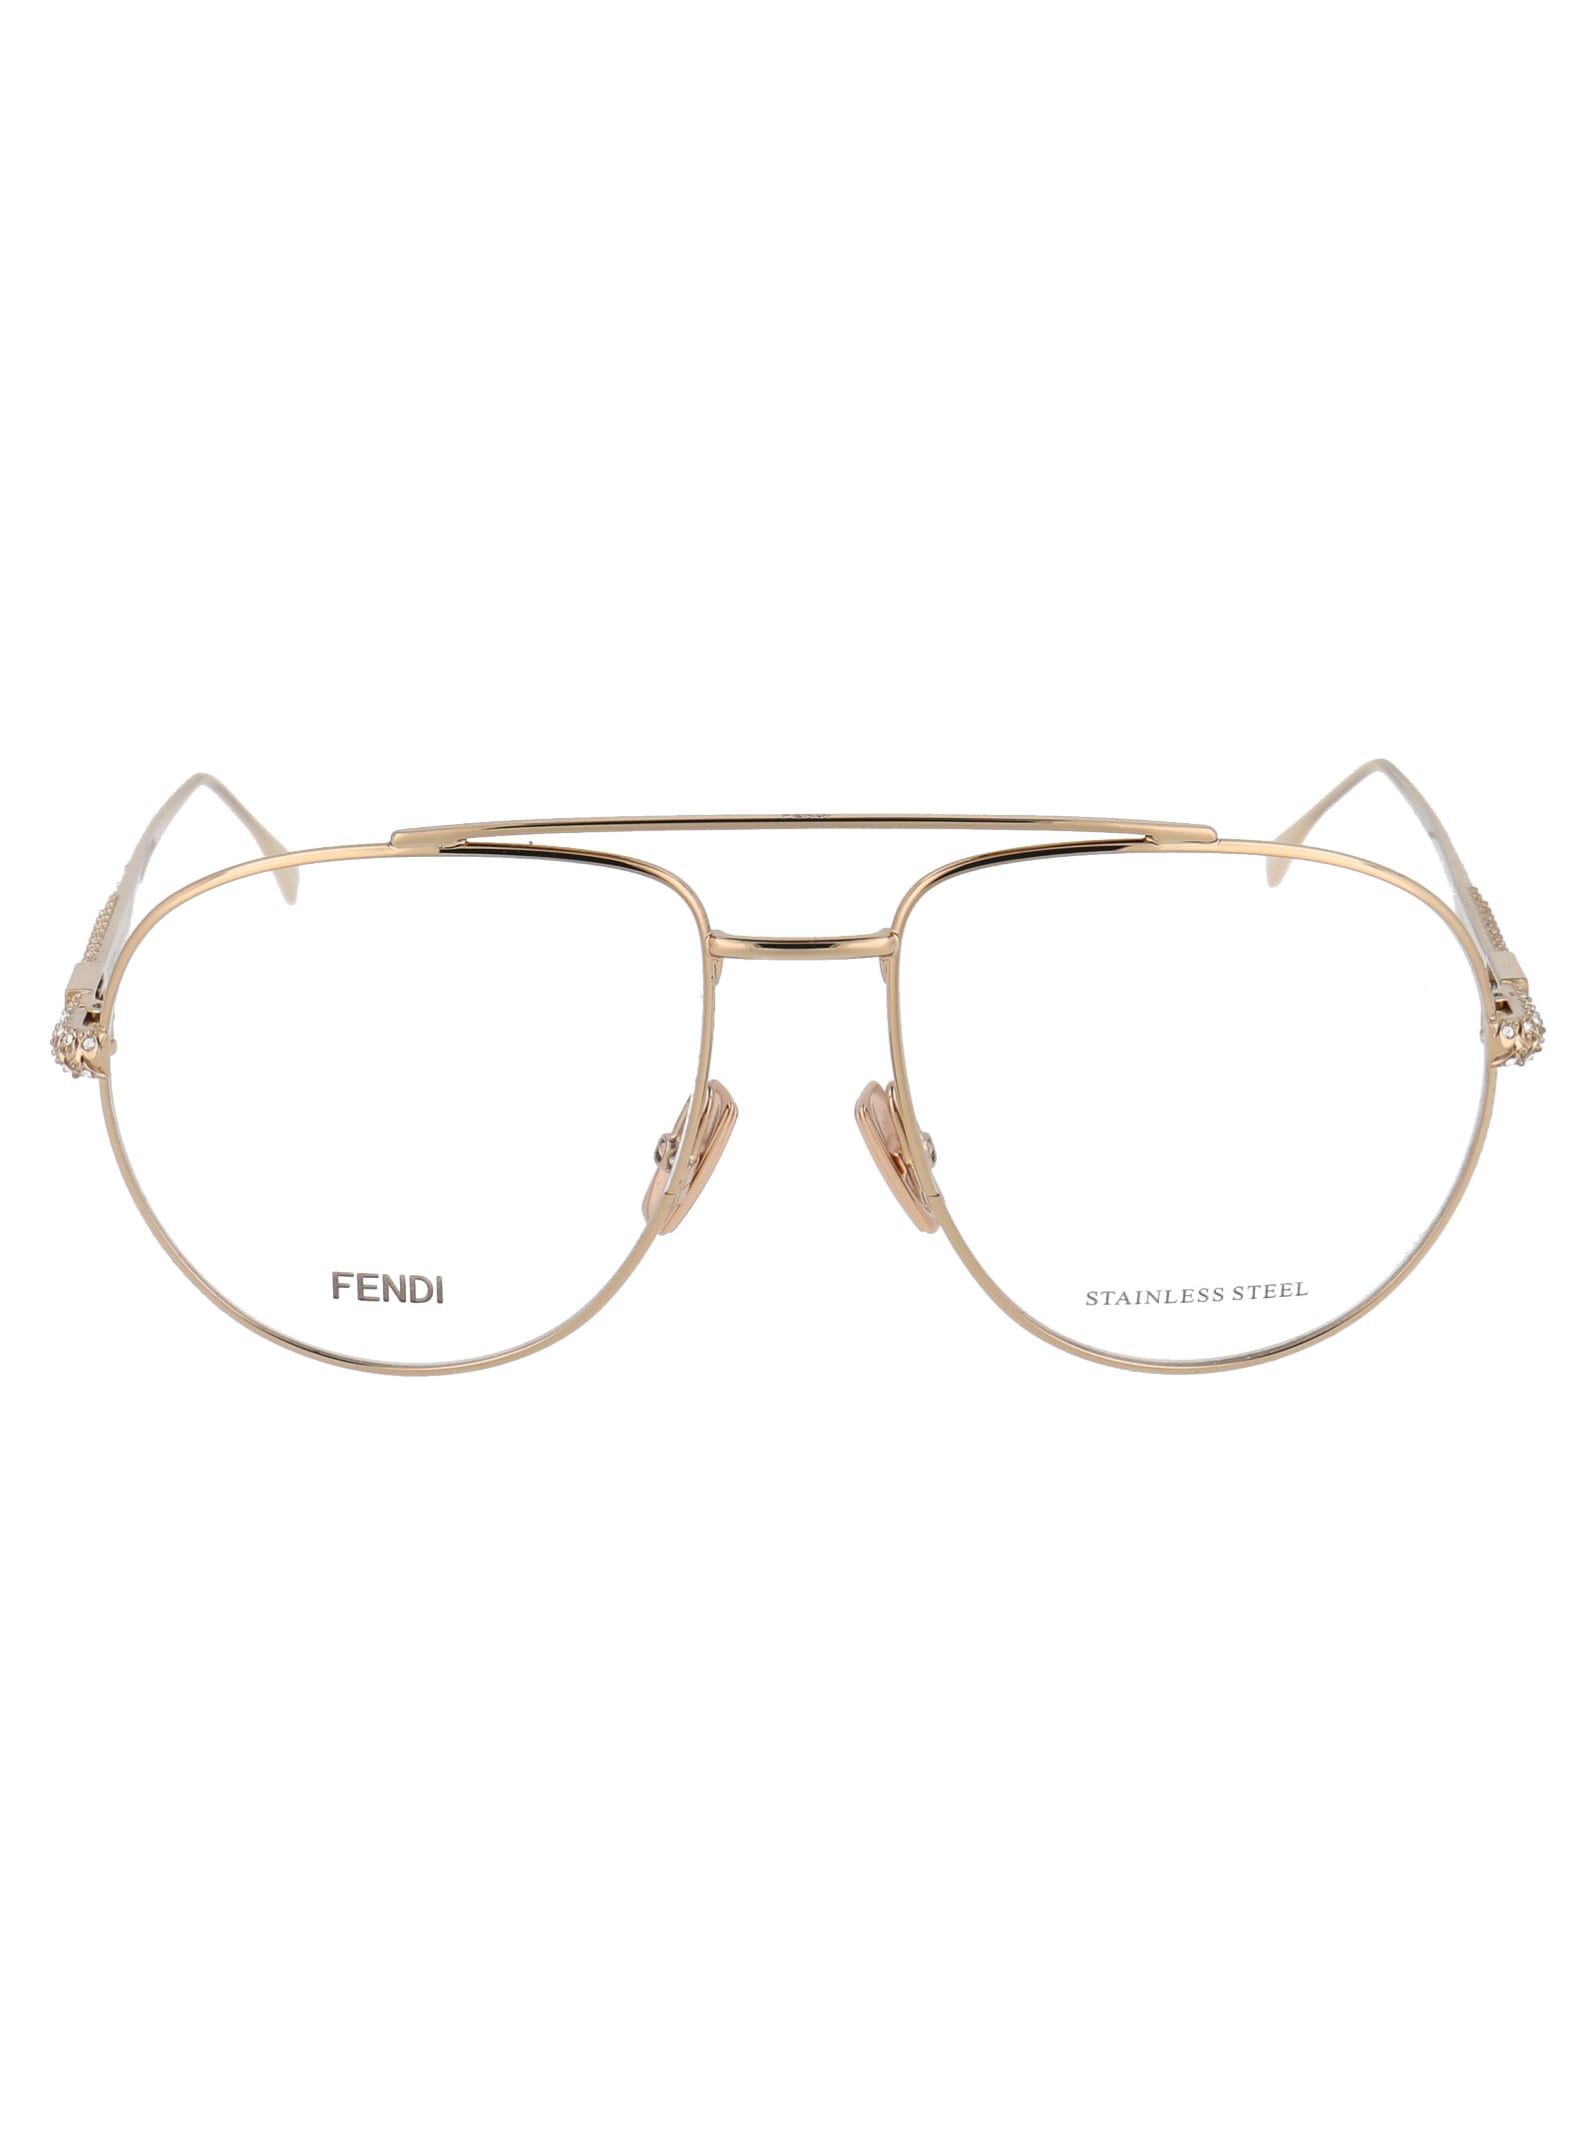 Fendi Ff 0446 Glasses In Gold